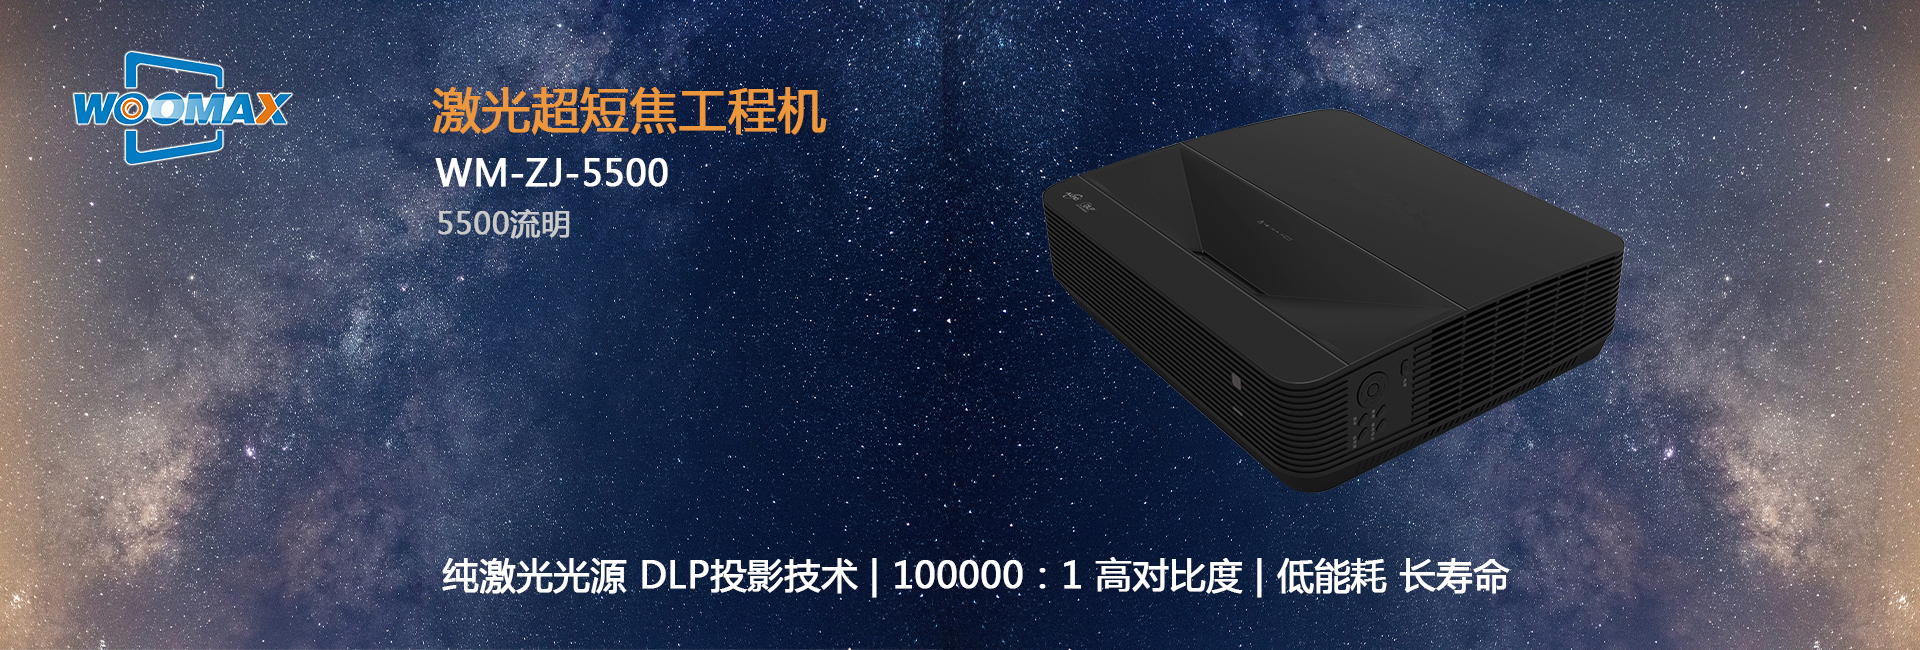 WM5500激光超短焦工程机